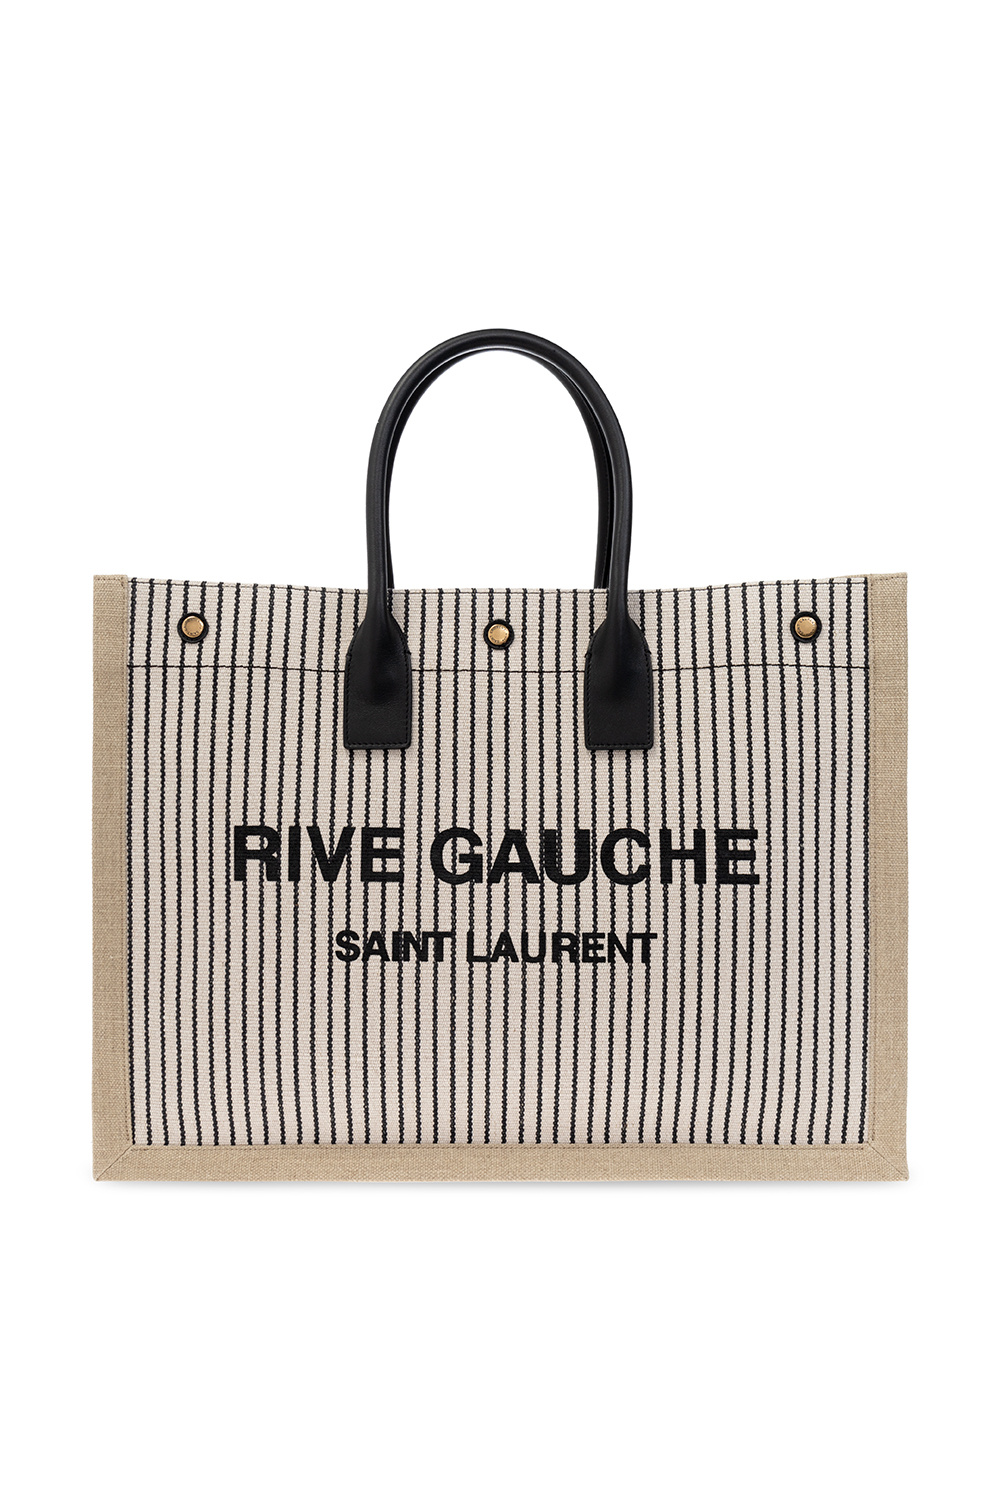 Beige ‘Rive Gauche’ shopper bag Saint Laurent - Vitkac GB